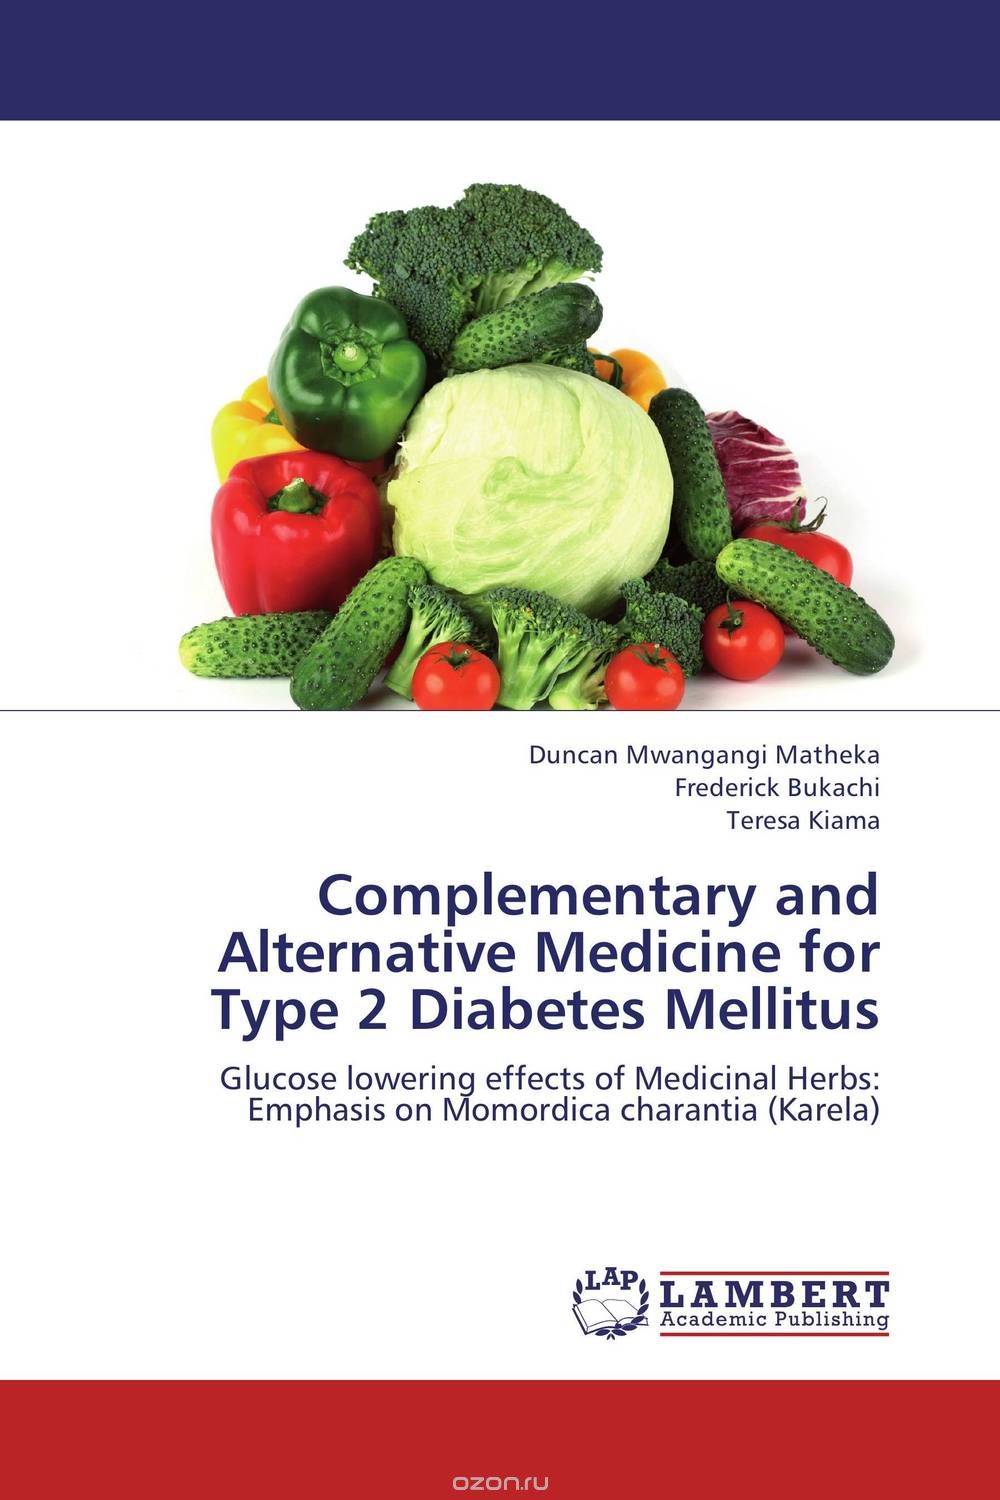 Скачать книгу "Complementary and Alternative Medicine for Type 2 Diabetes Mellitus"